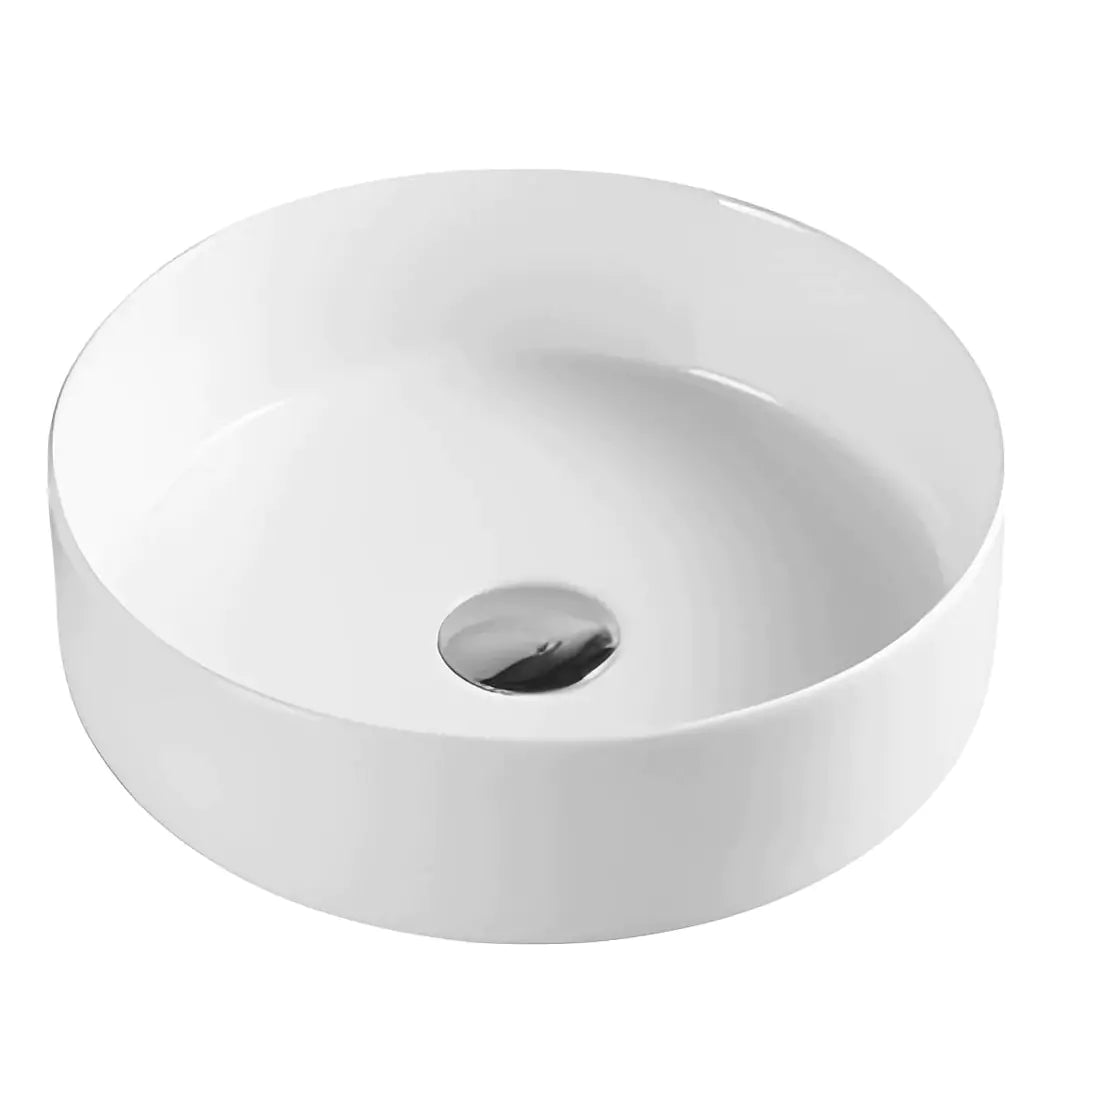 Ultra Slim 346mm Ceramic Basin: Sleek and Stylish Bathroom Essential-Gloss White-PA3535